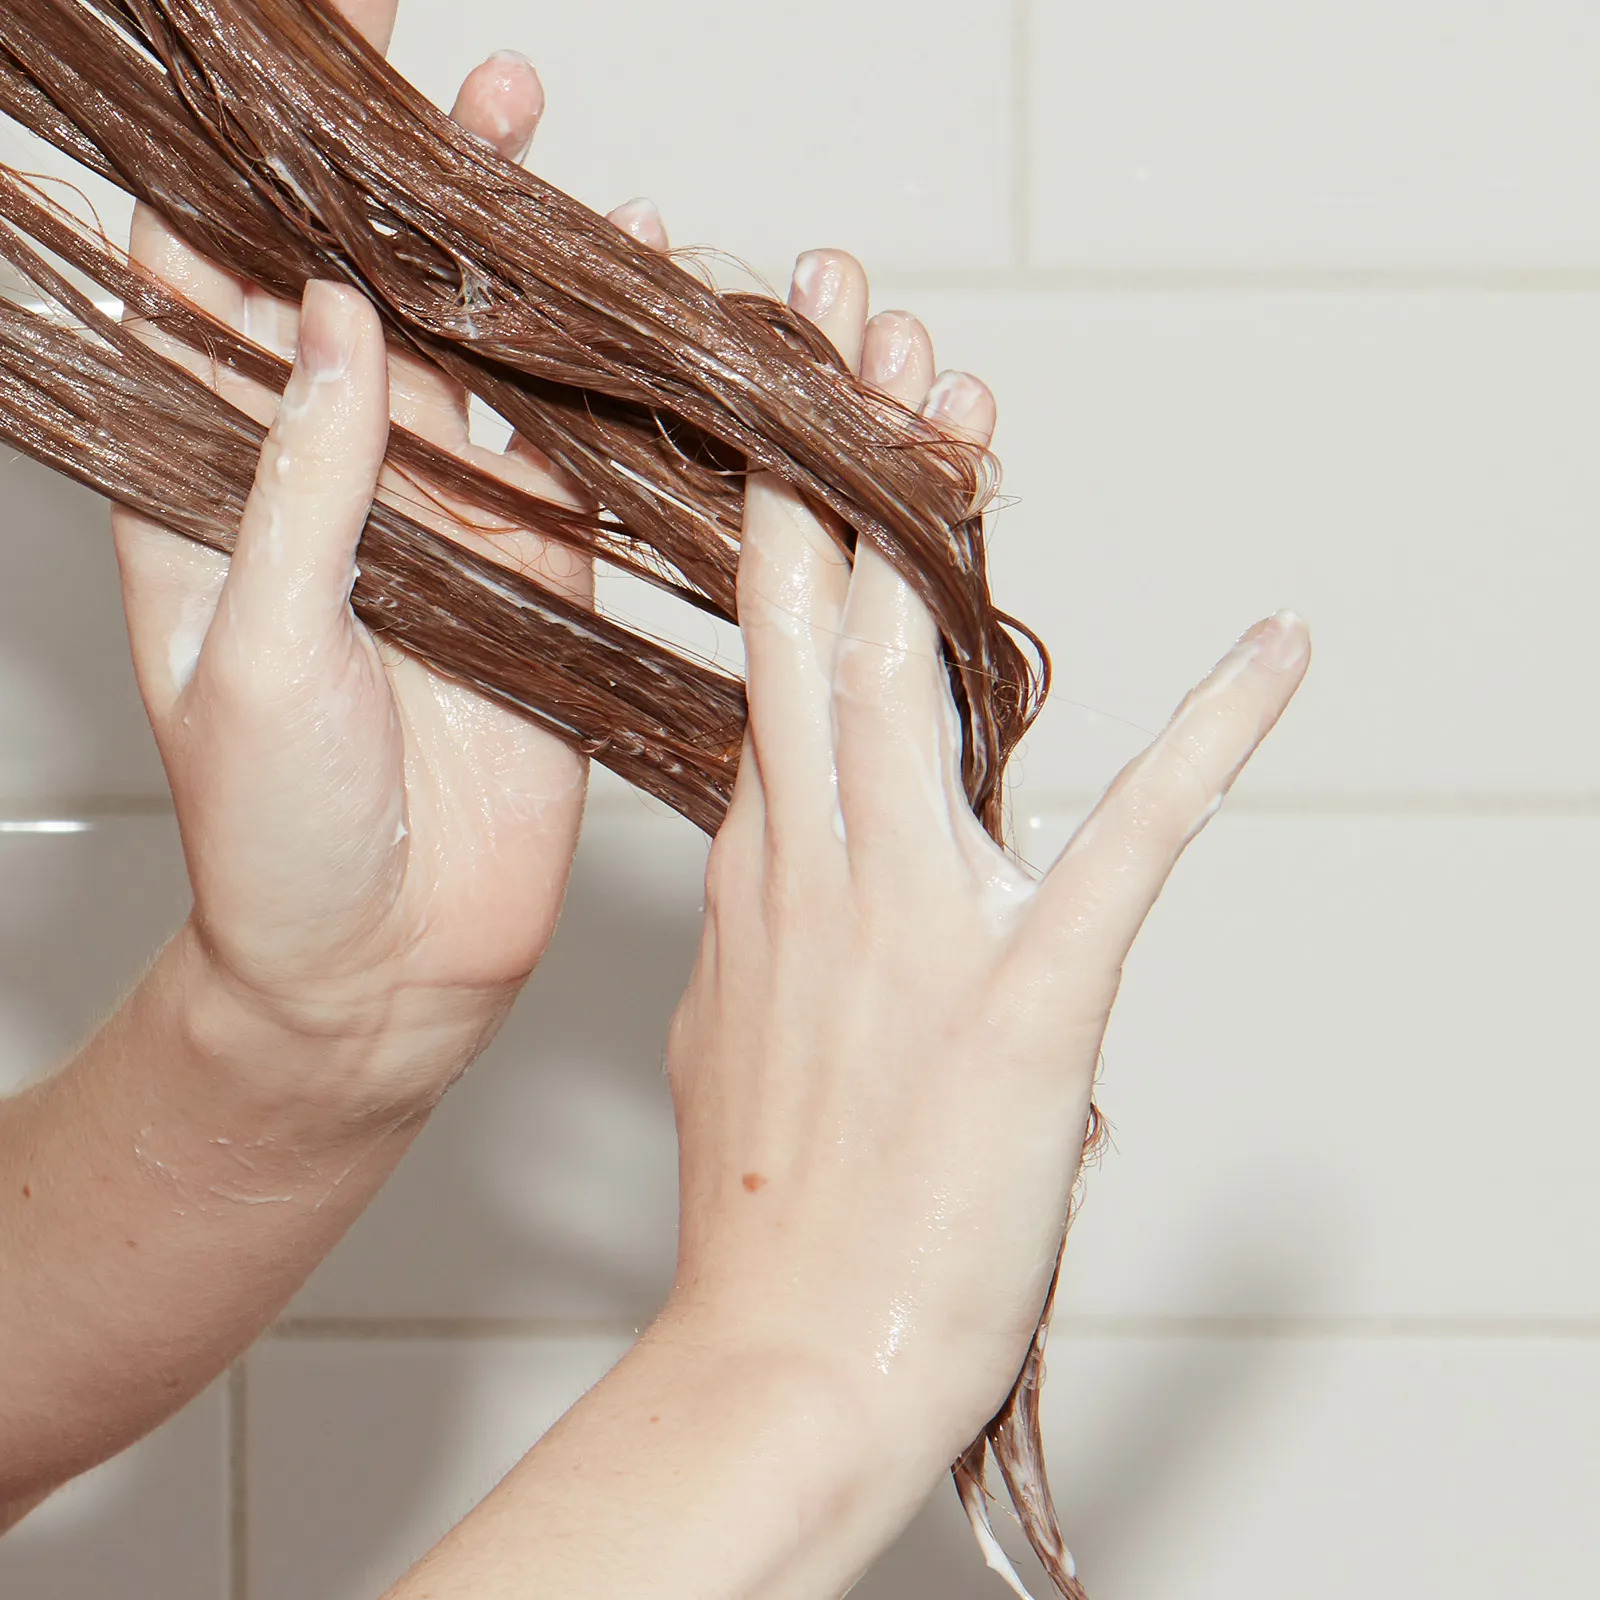 Closeup of fingers raking conditioner through wet hair